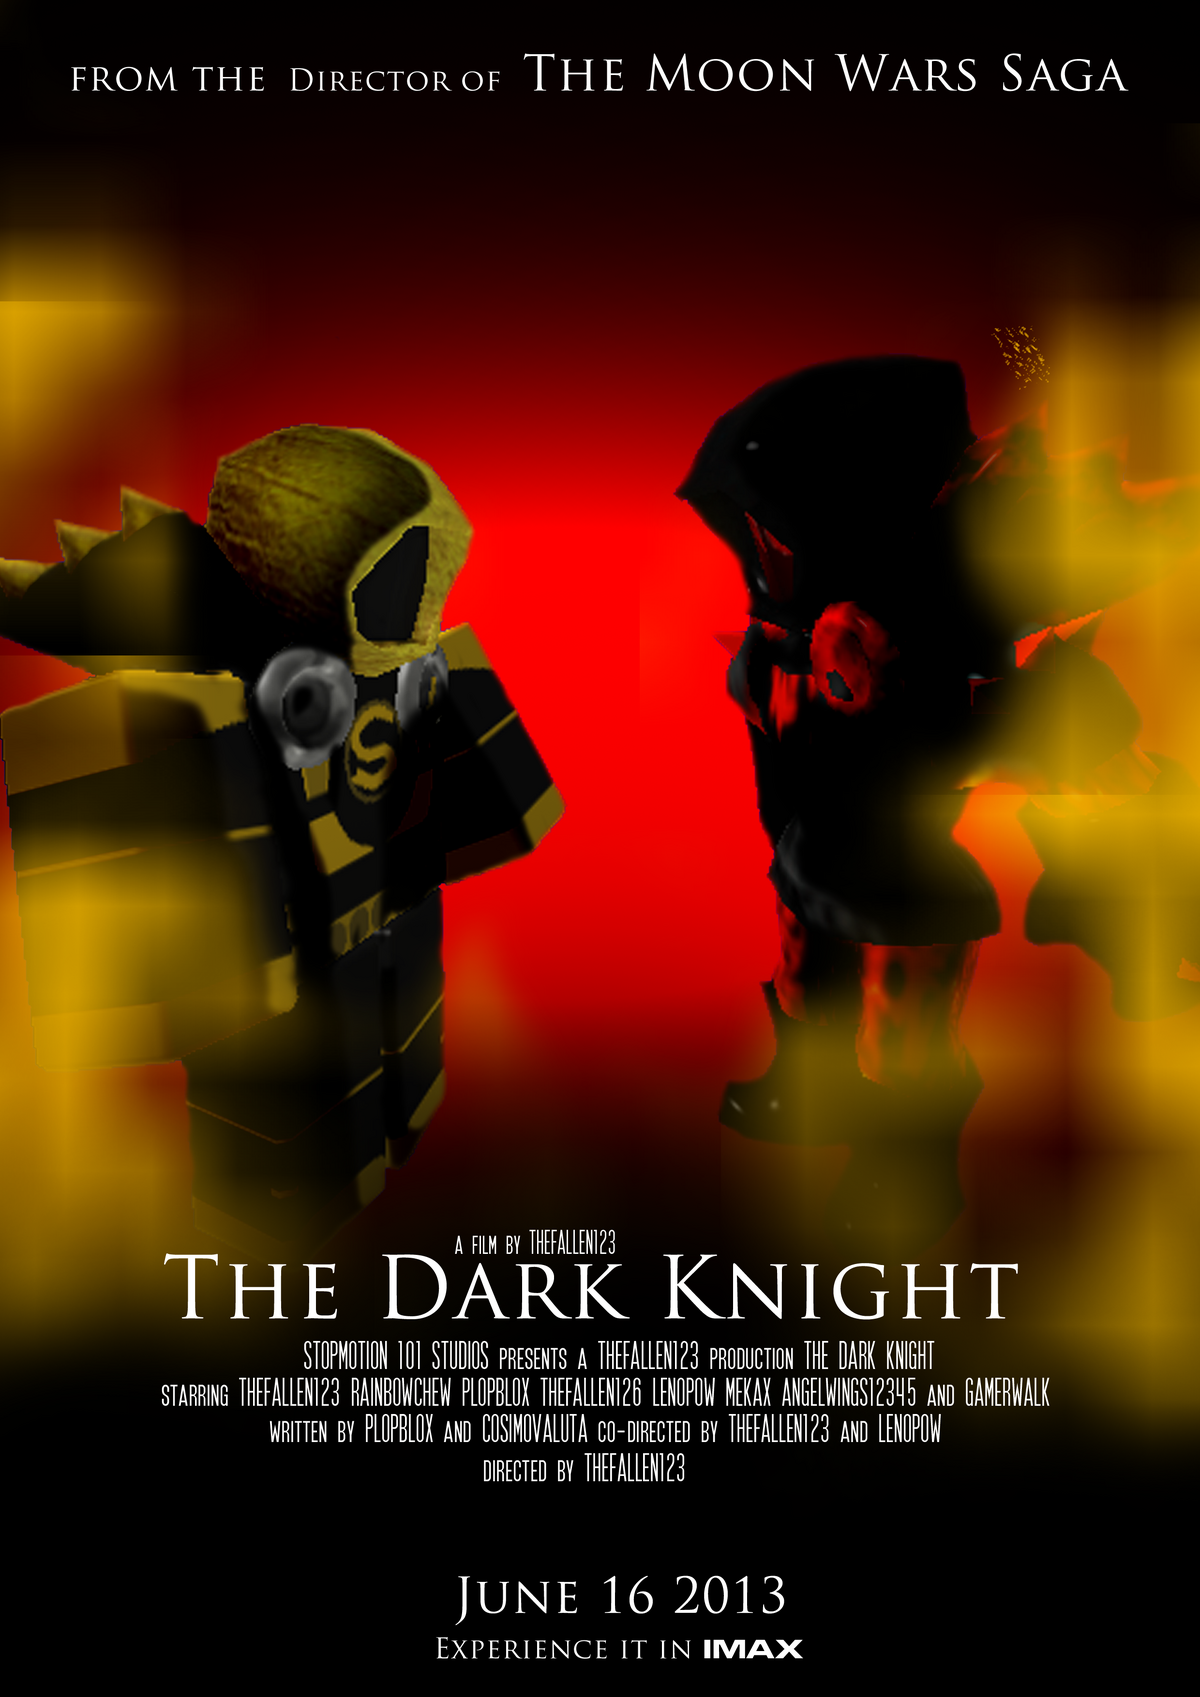 The Dark Knight, Superhero Films Wiki